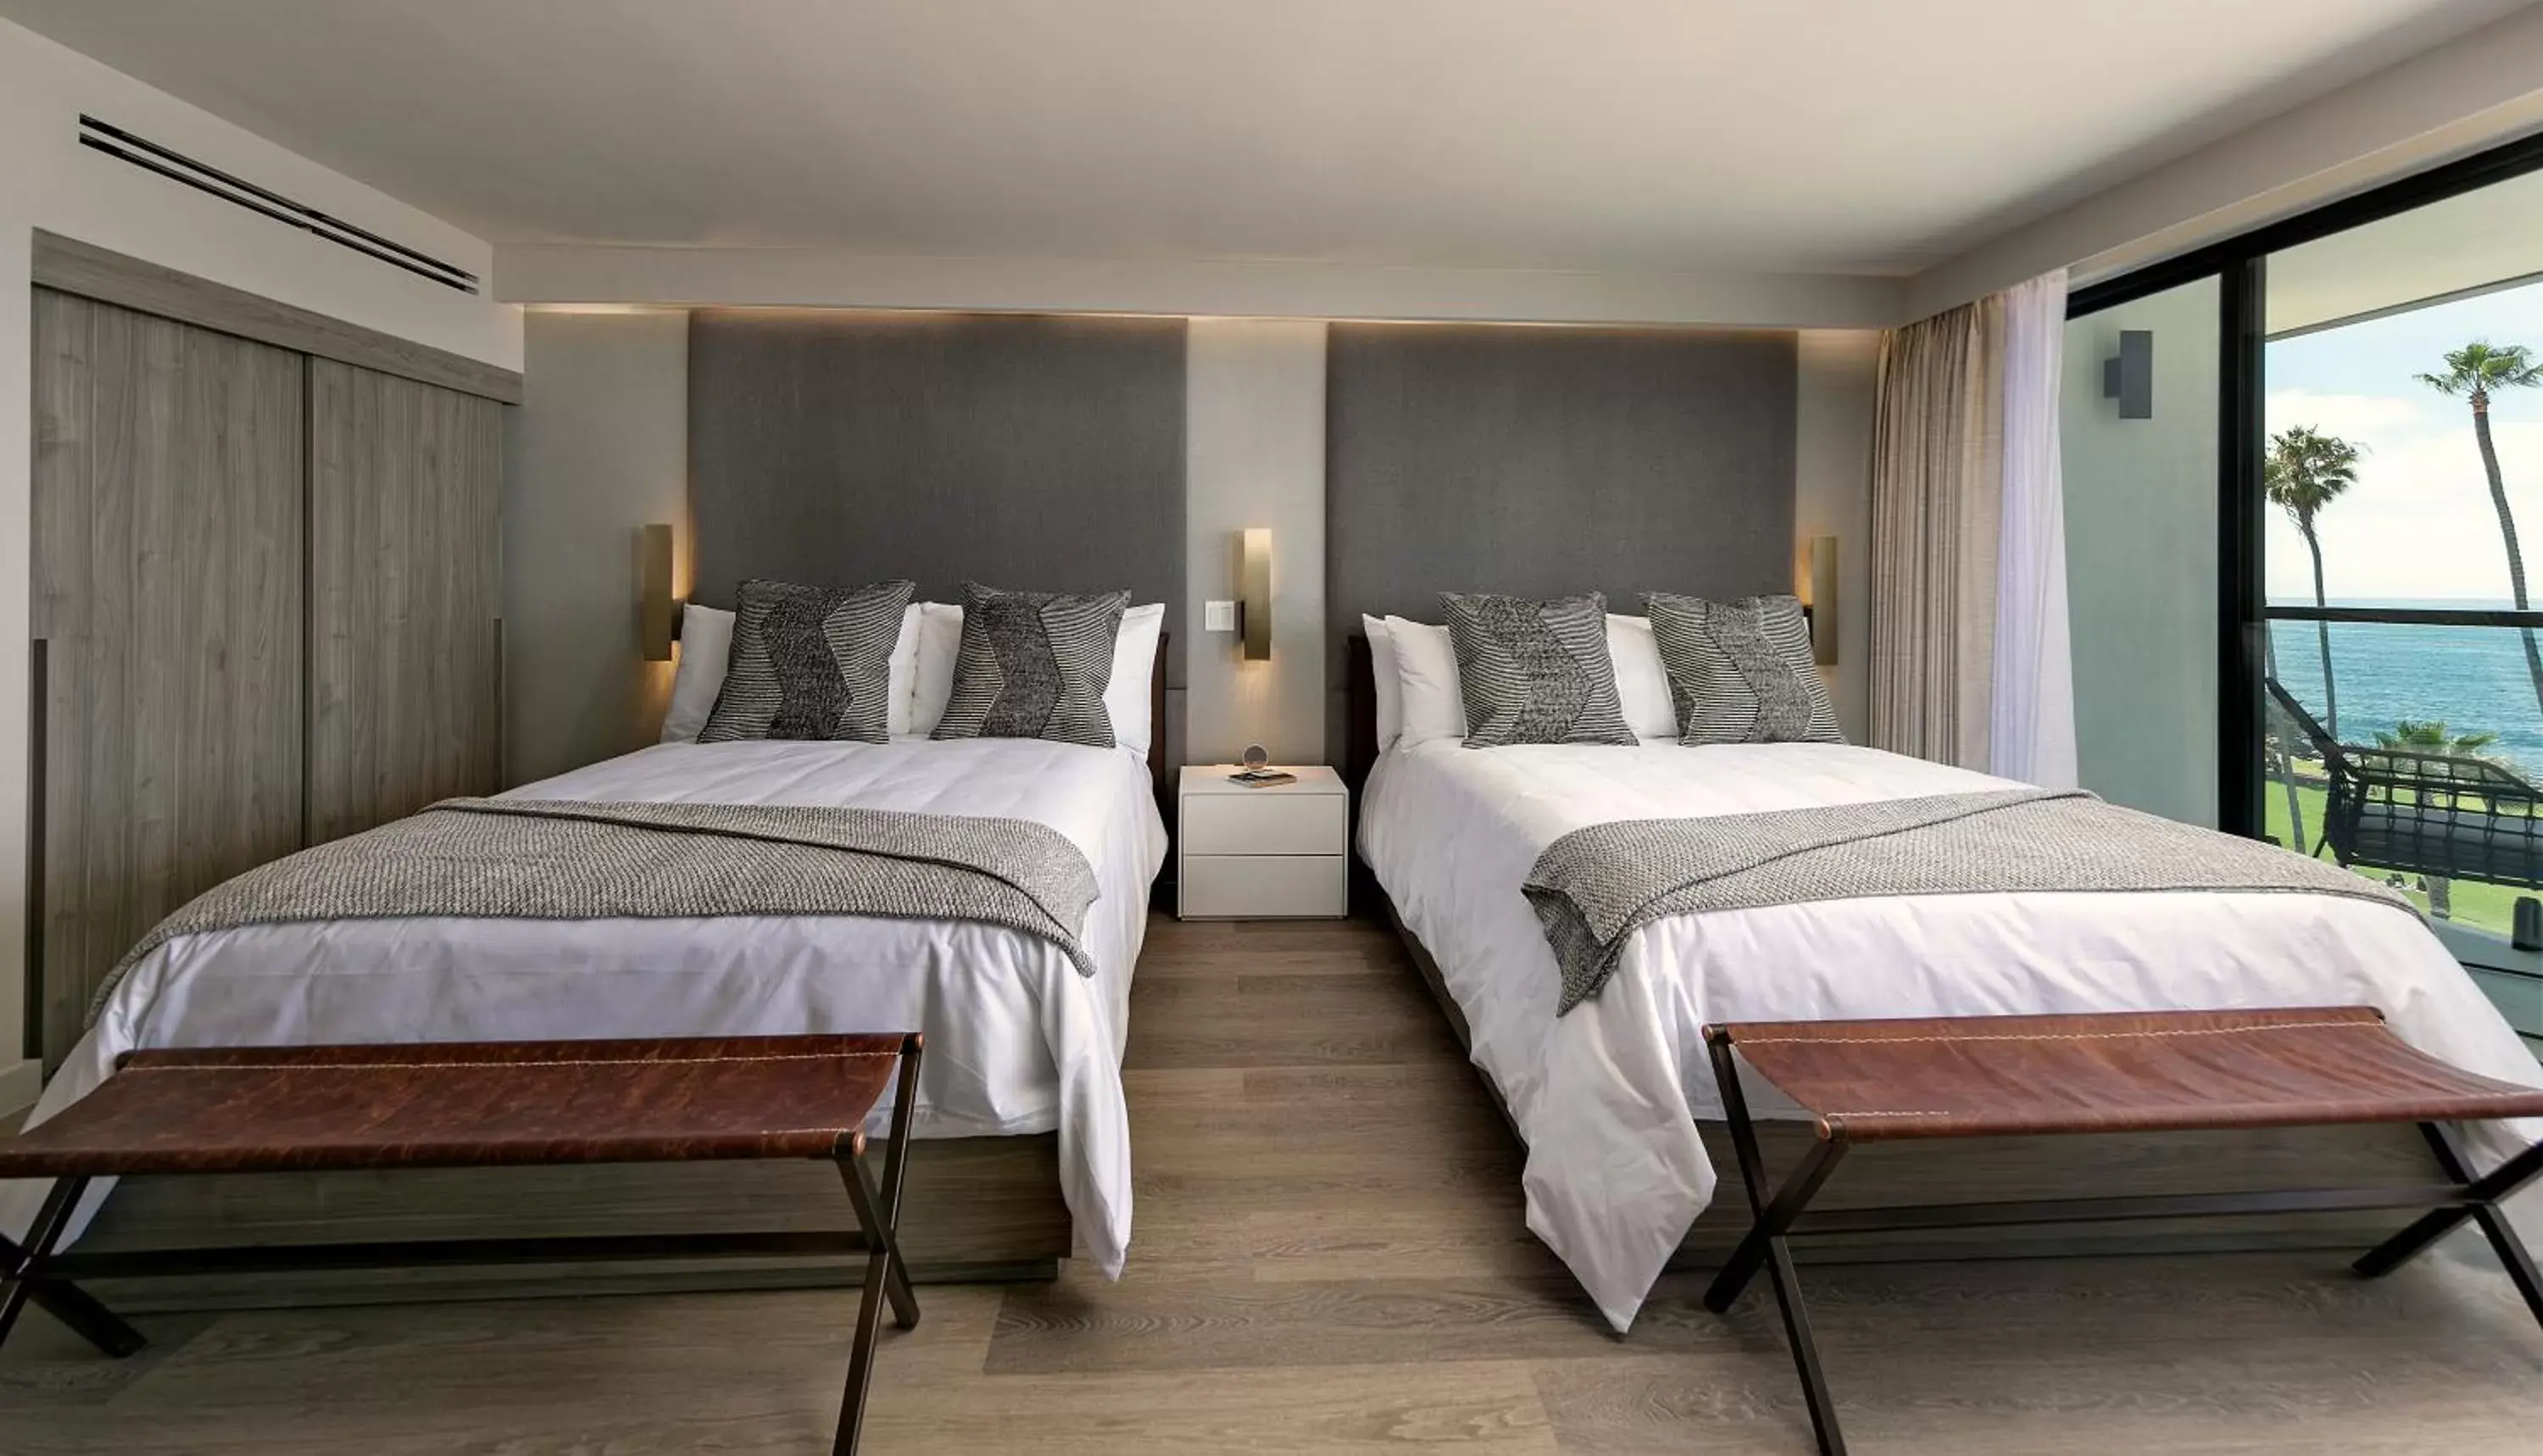 Bed, Room Photo in La Jolla Cove Suites